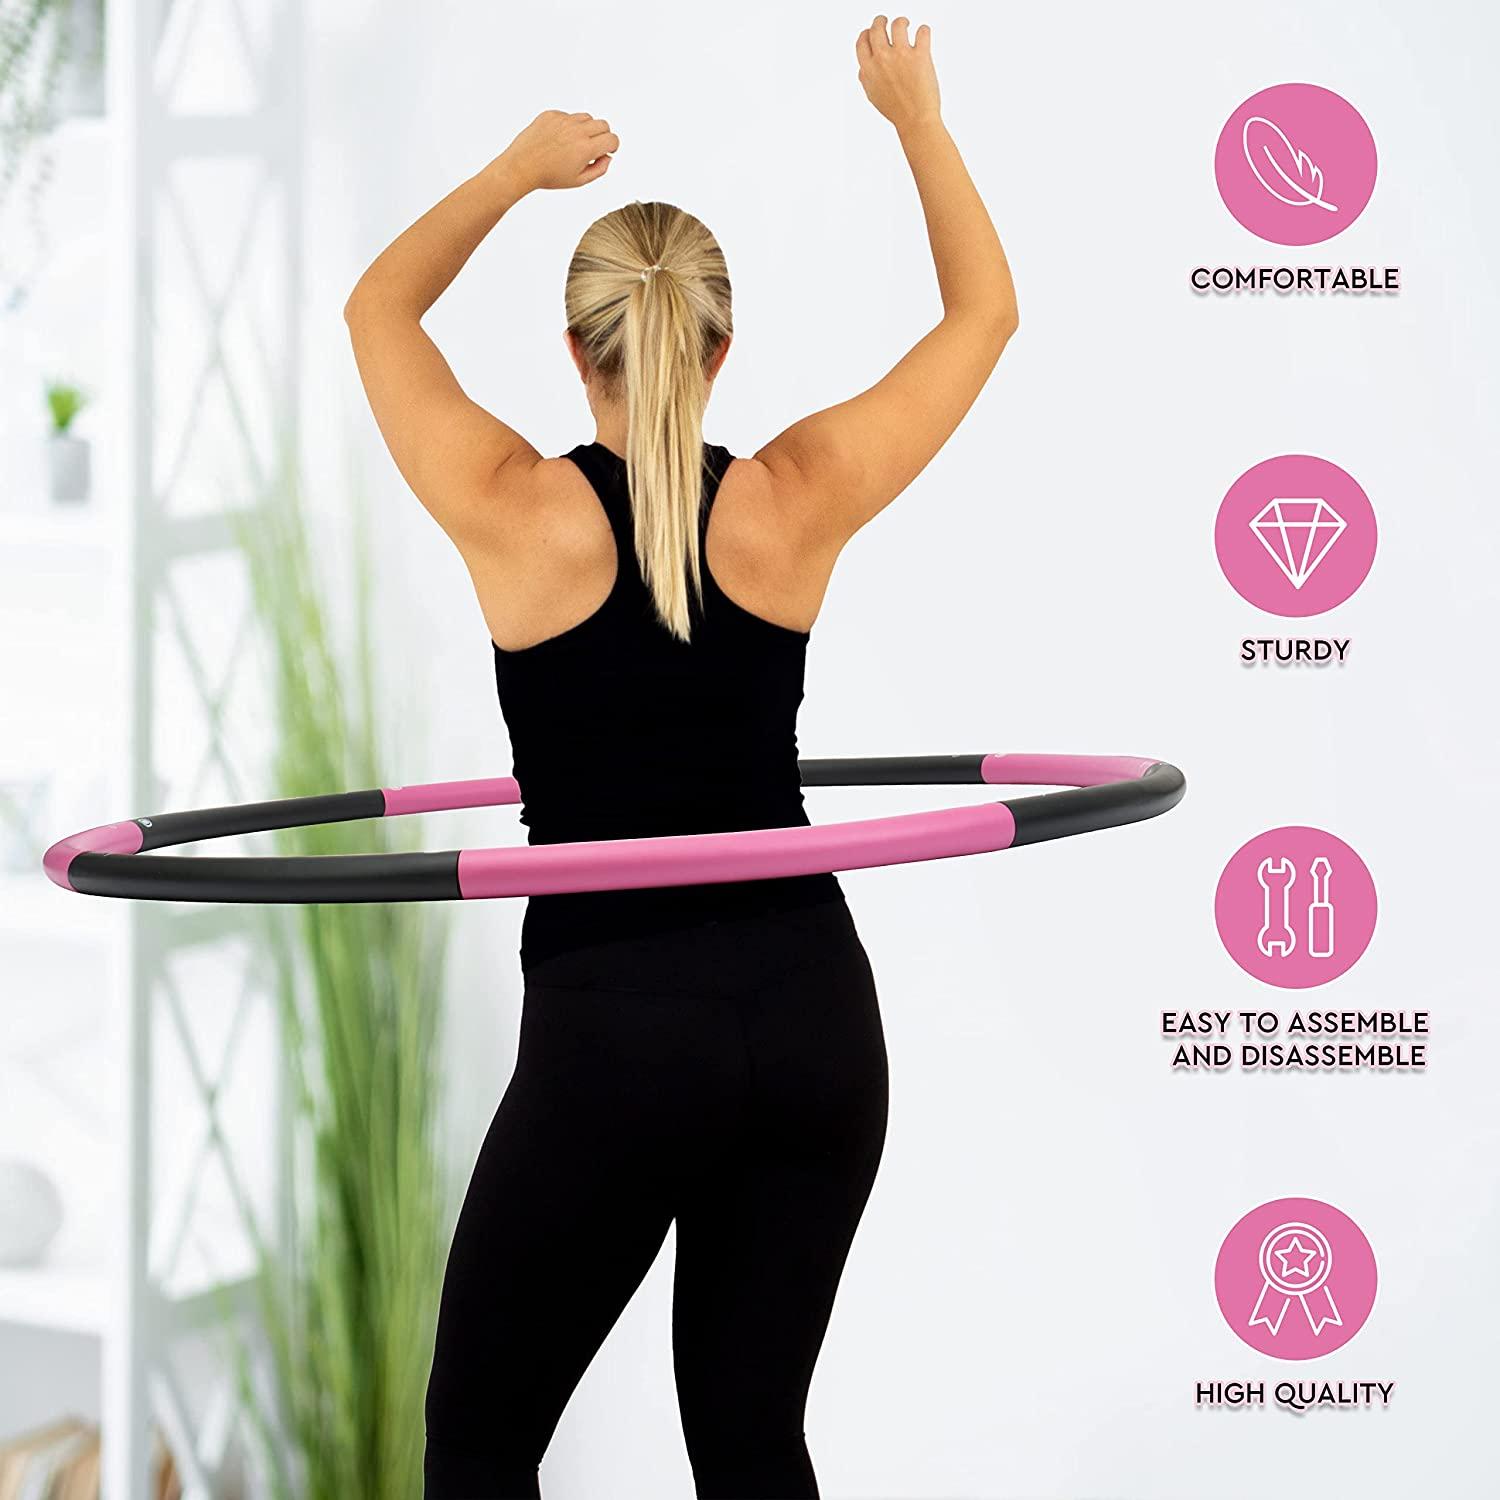 Hula hoops help strengthen your abdomen, back and waist